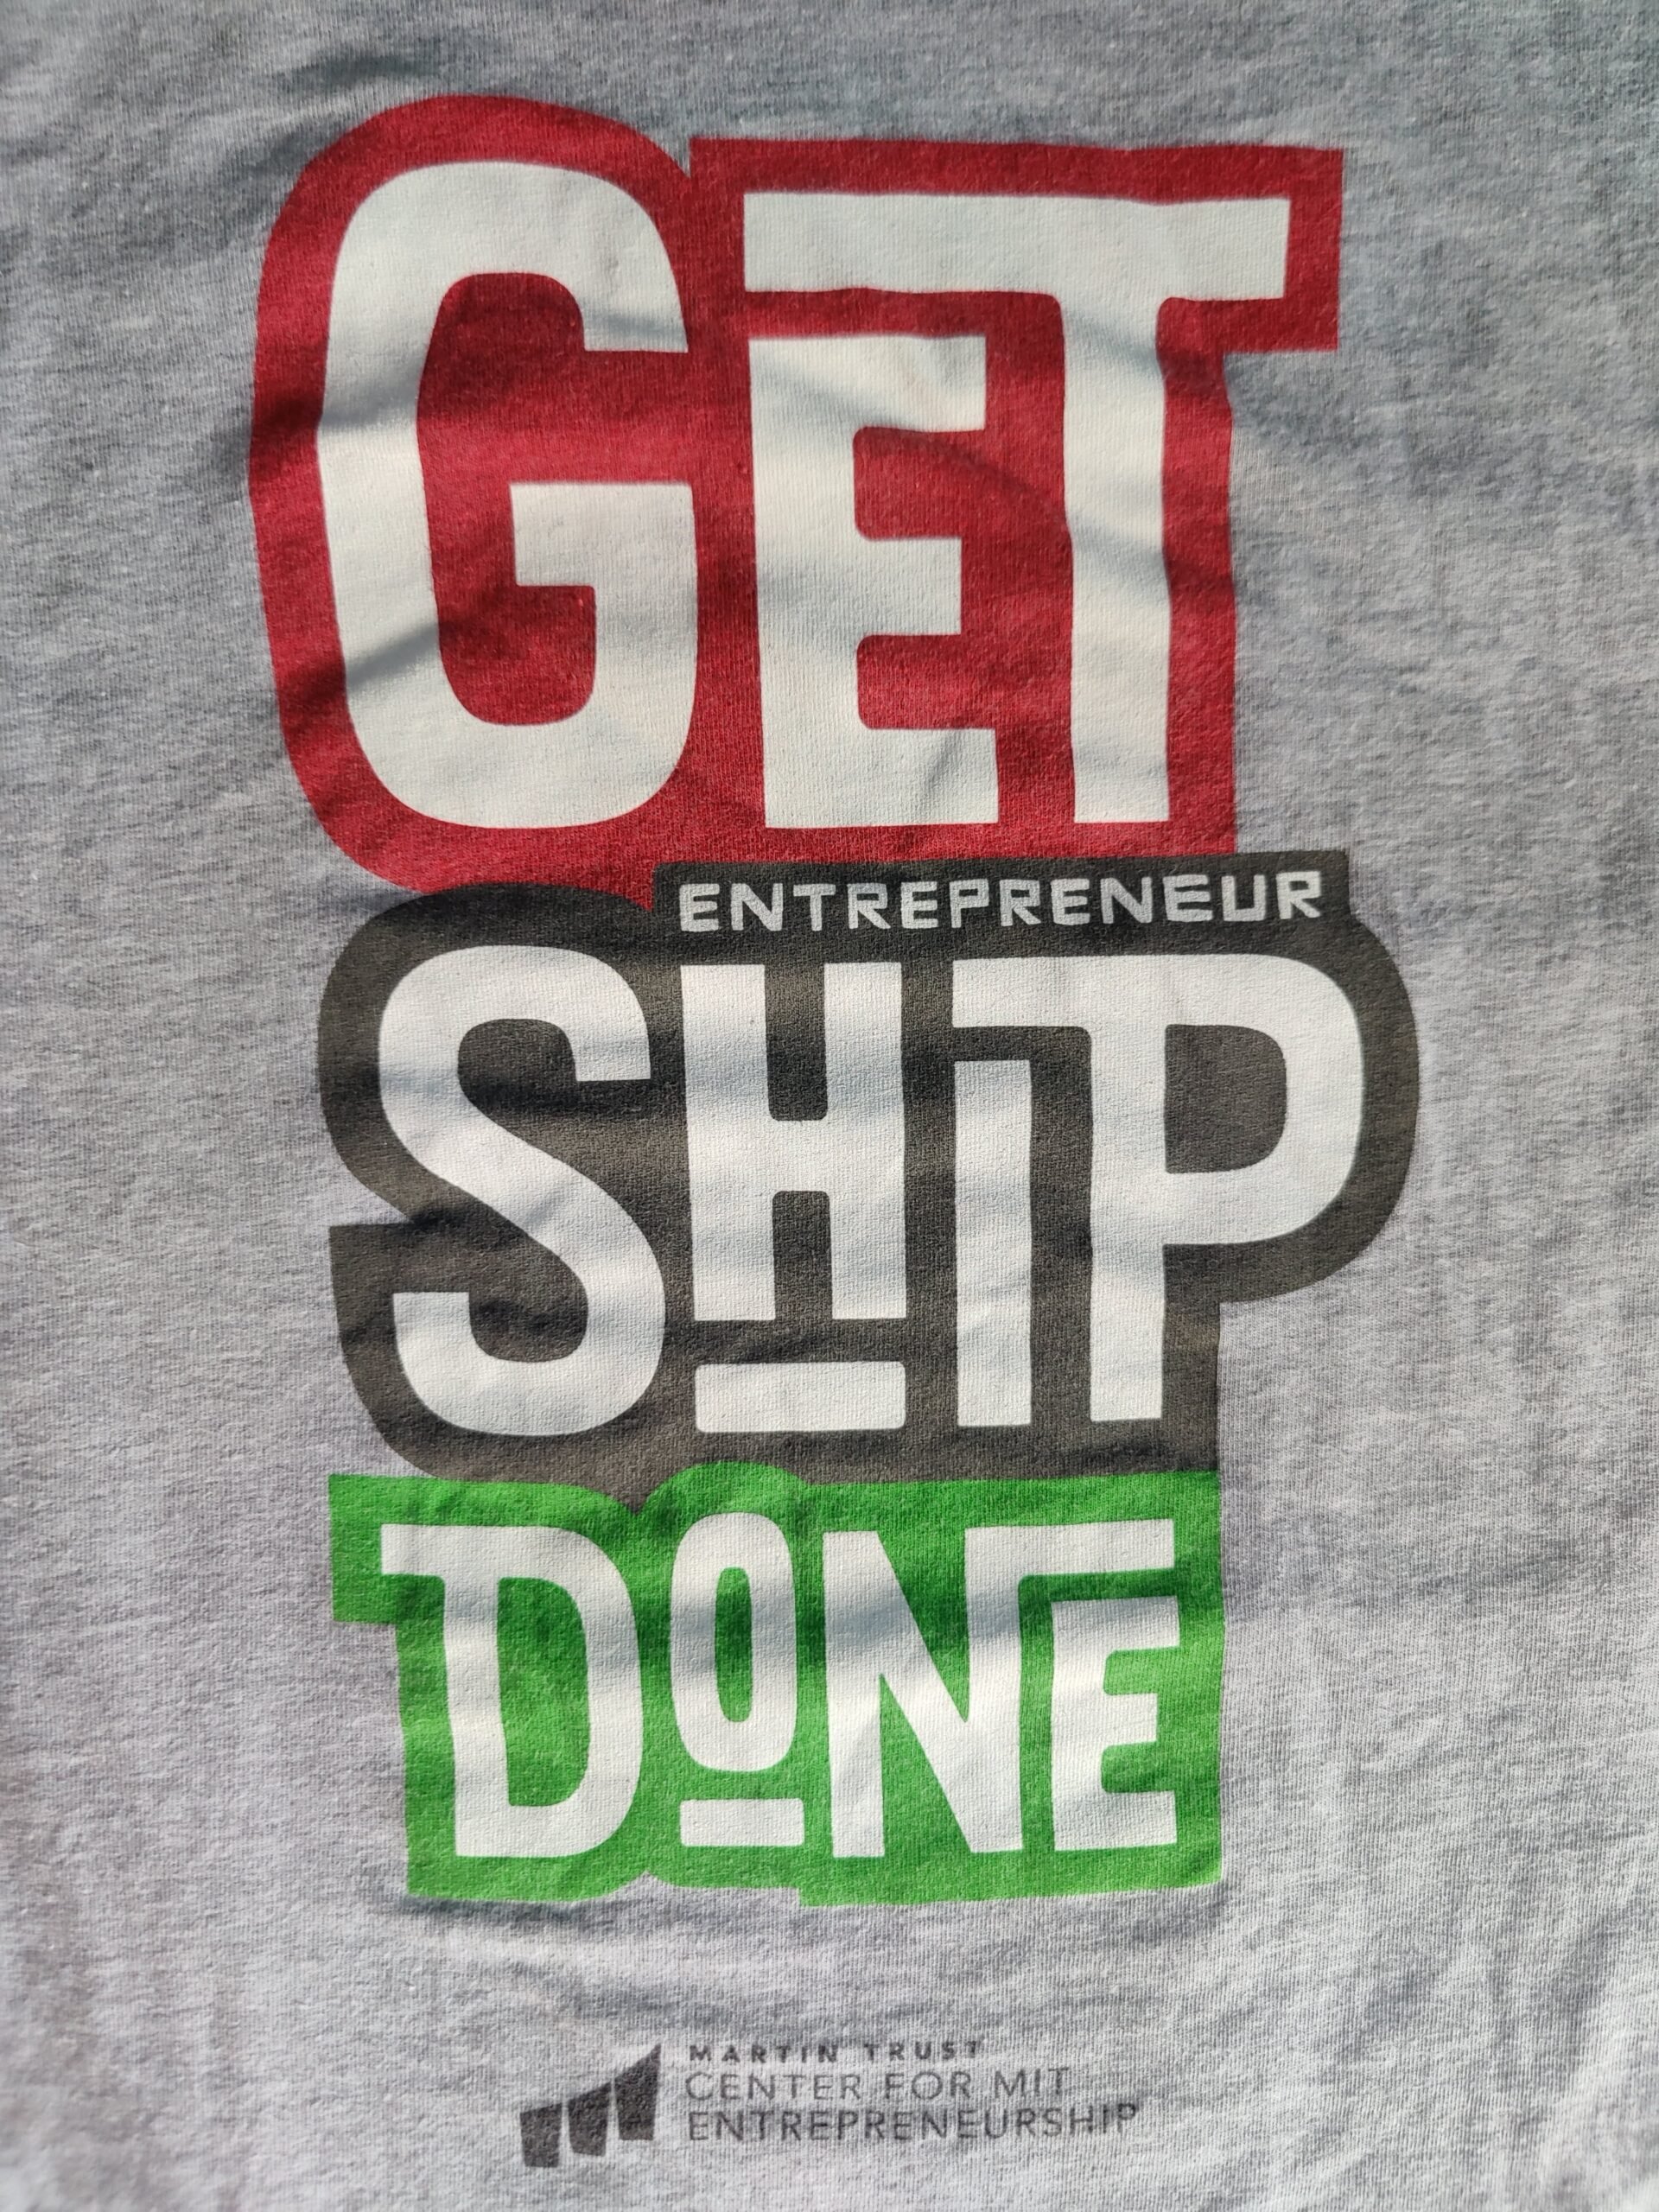 entrepreneurship/martin trust shirt